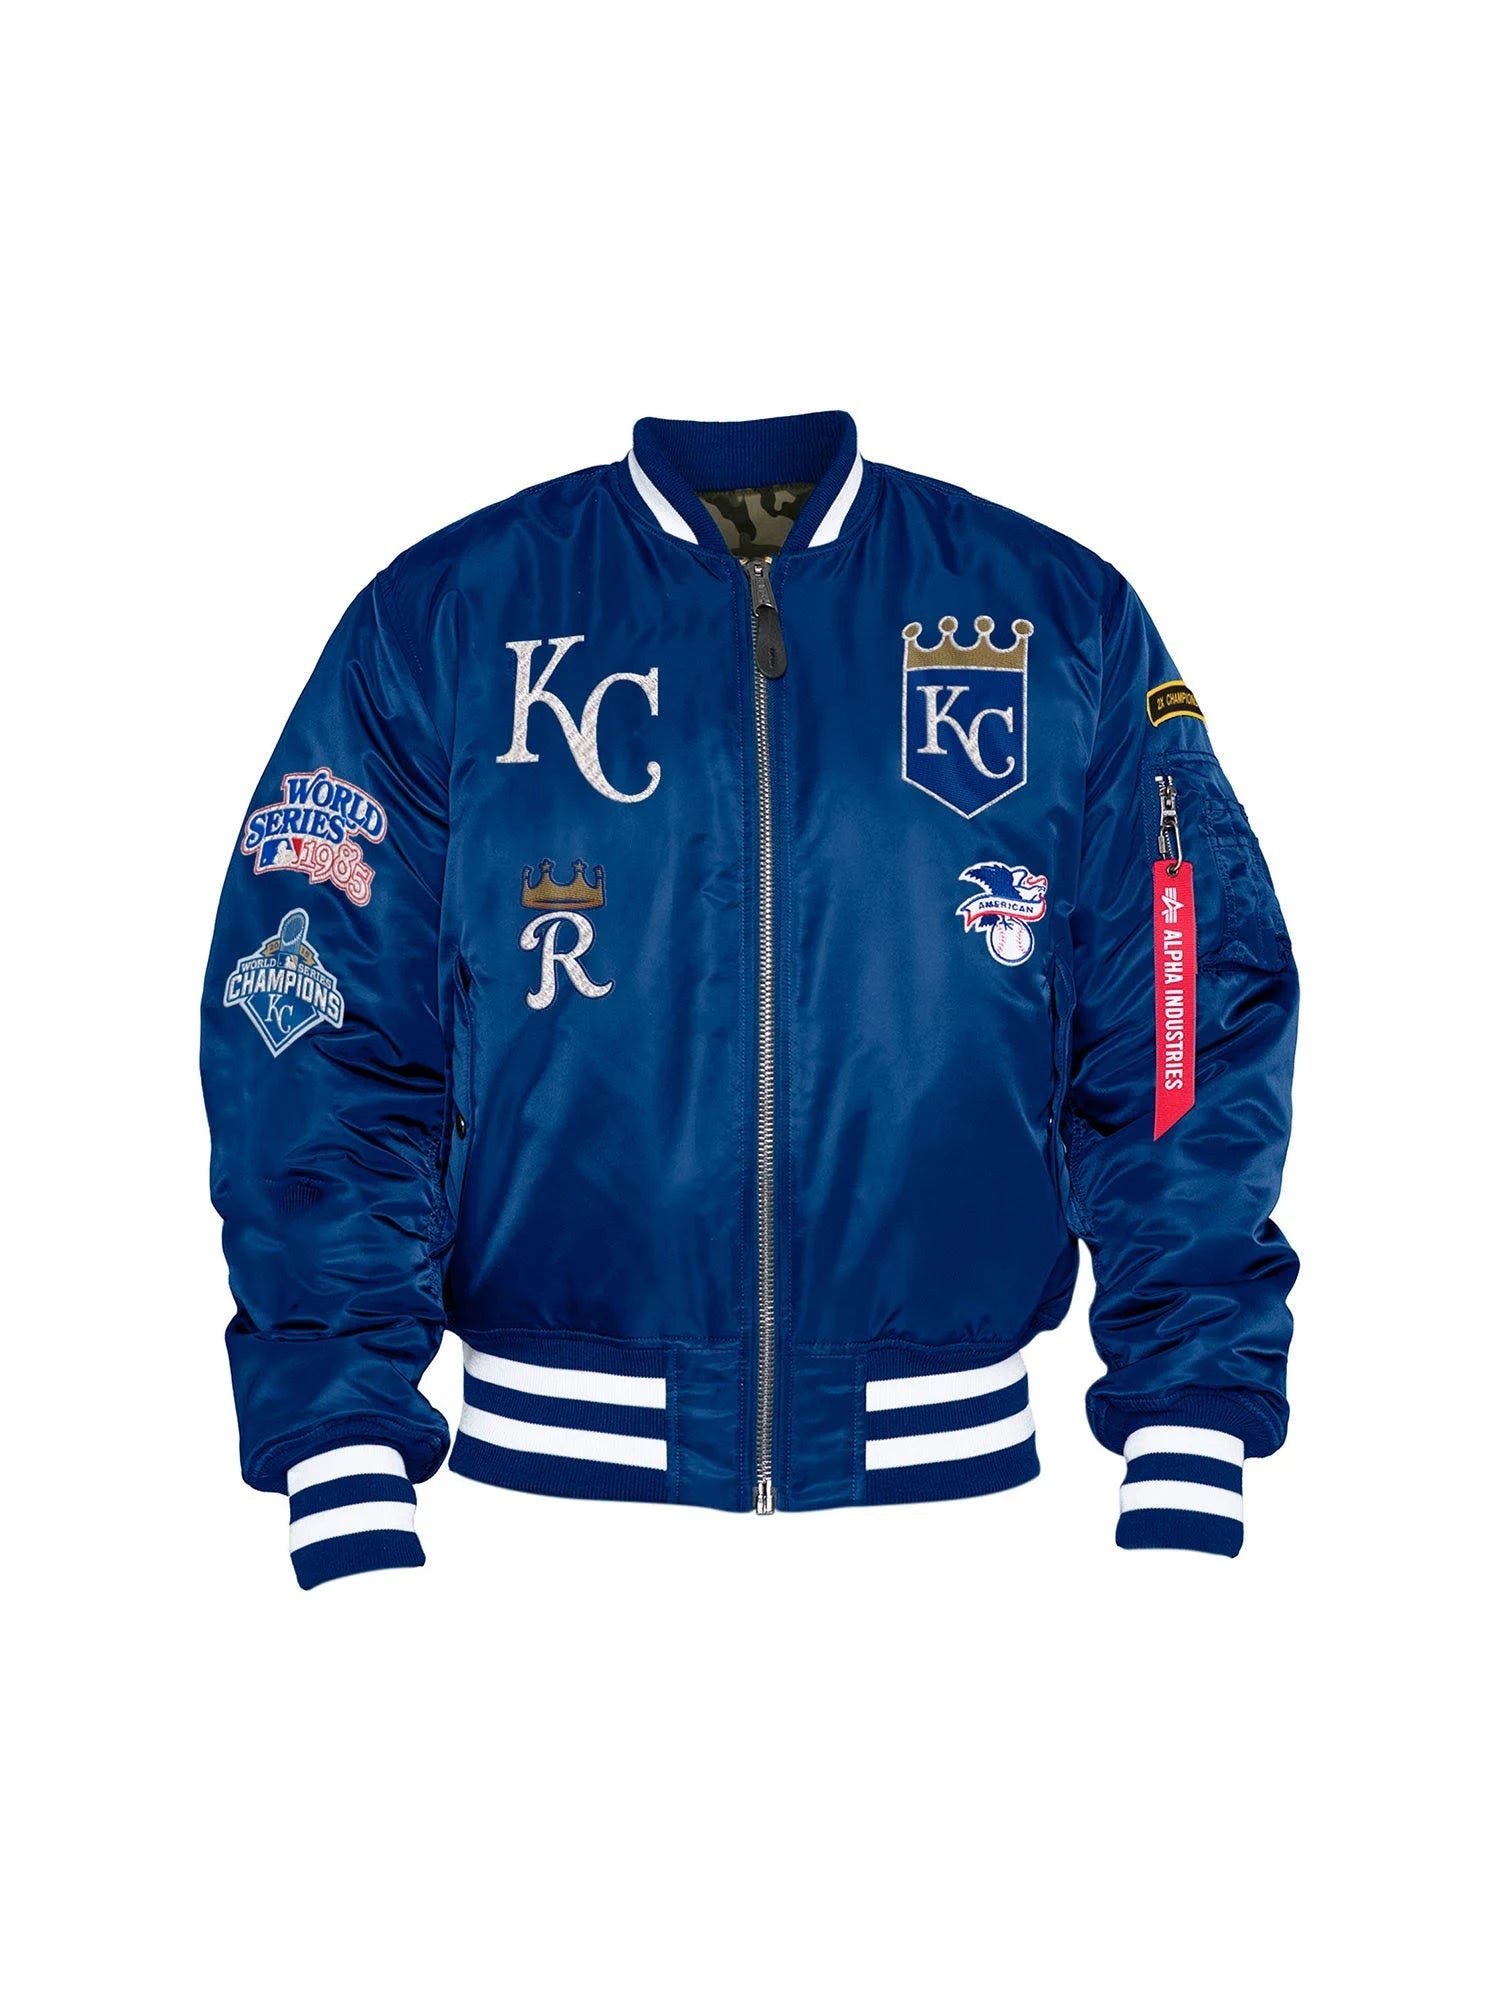 Kansas City Royals added a new photo. - Kansas City Royals